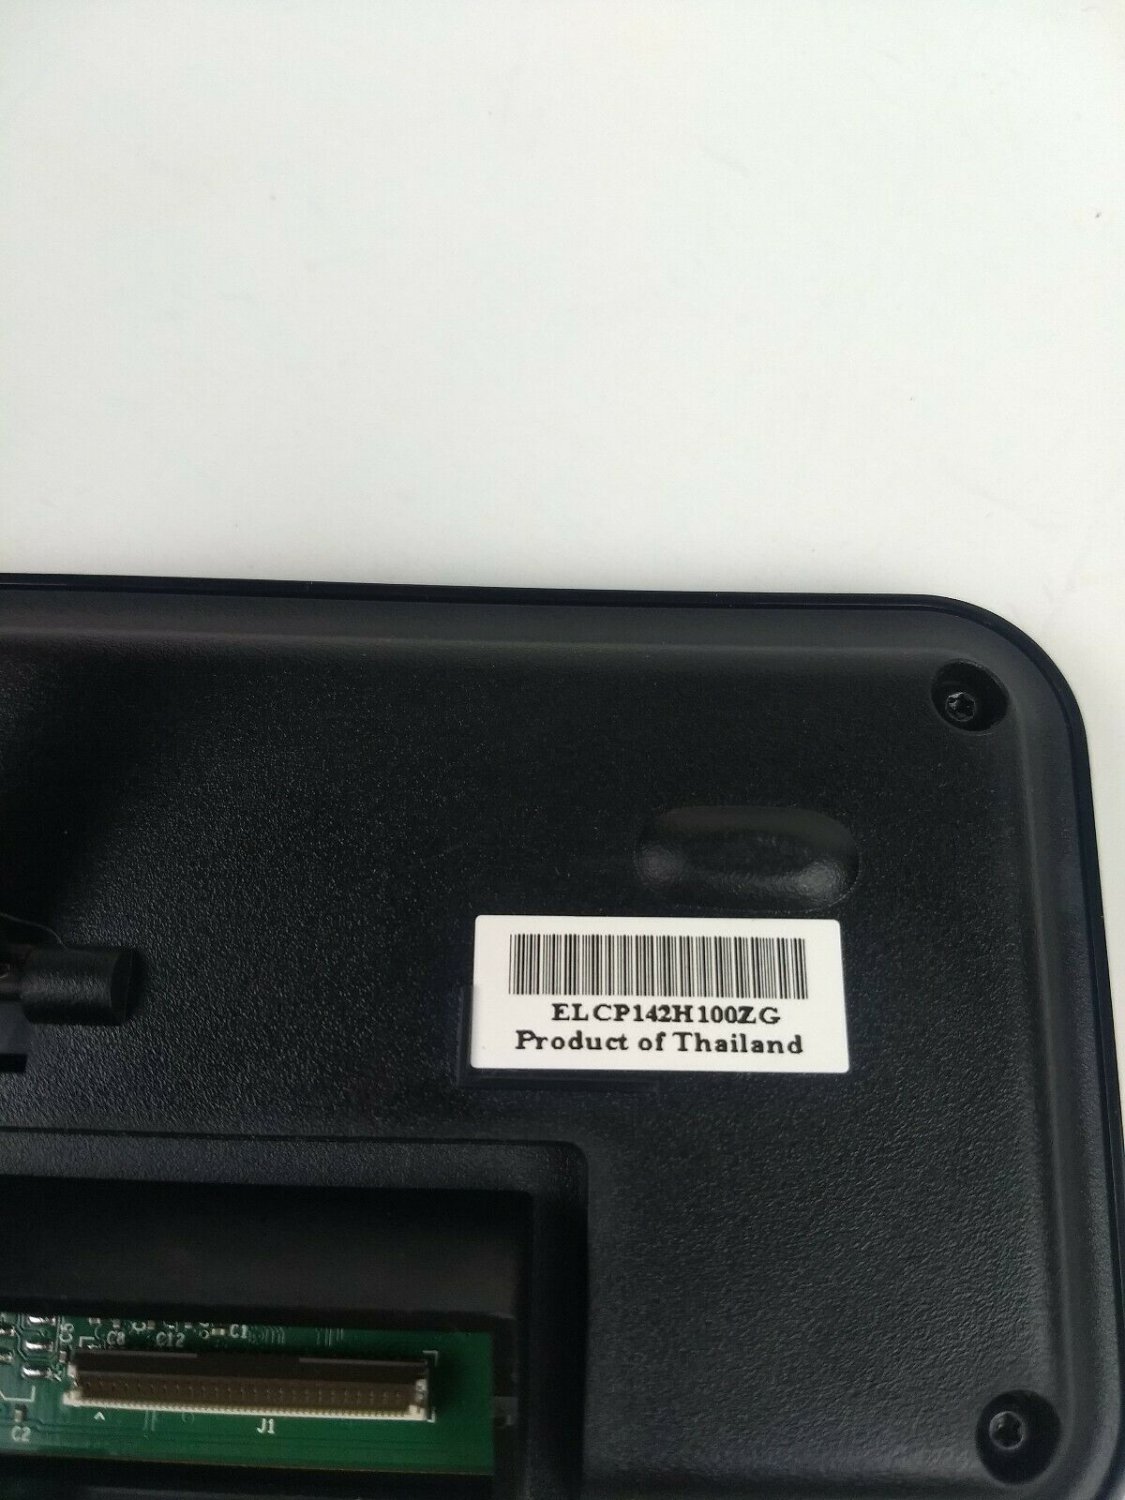 hp photosmart 7525 printer error from ios device